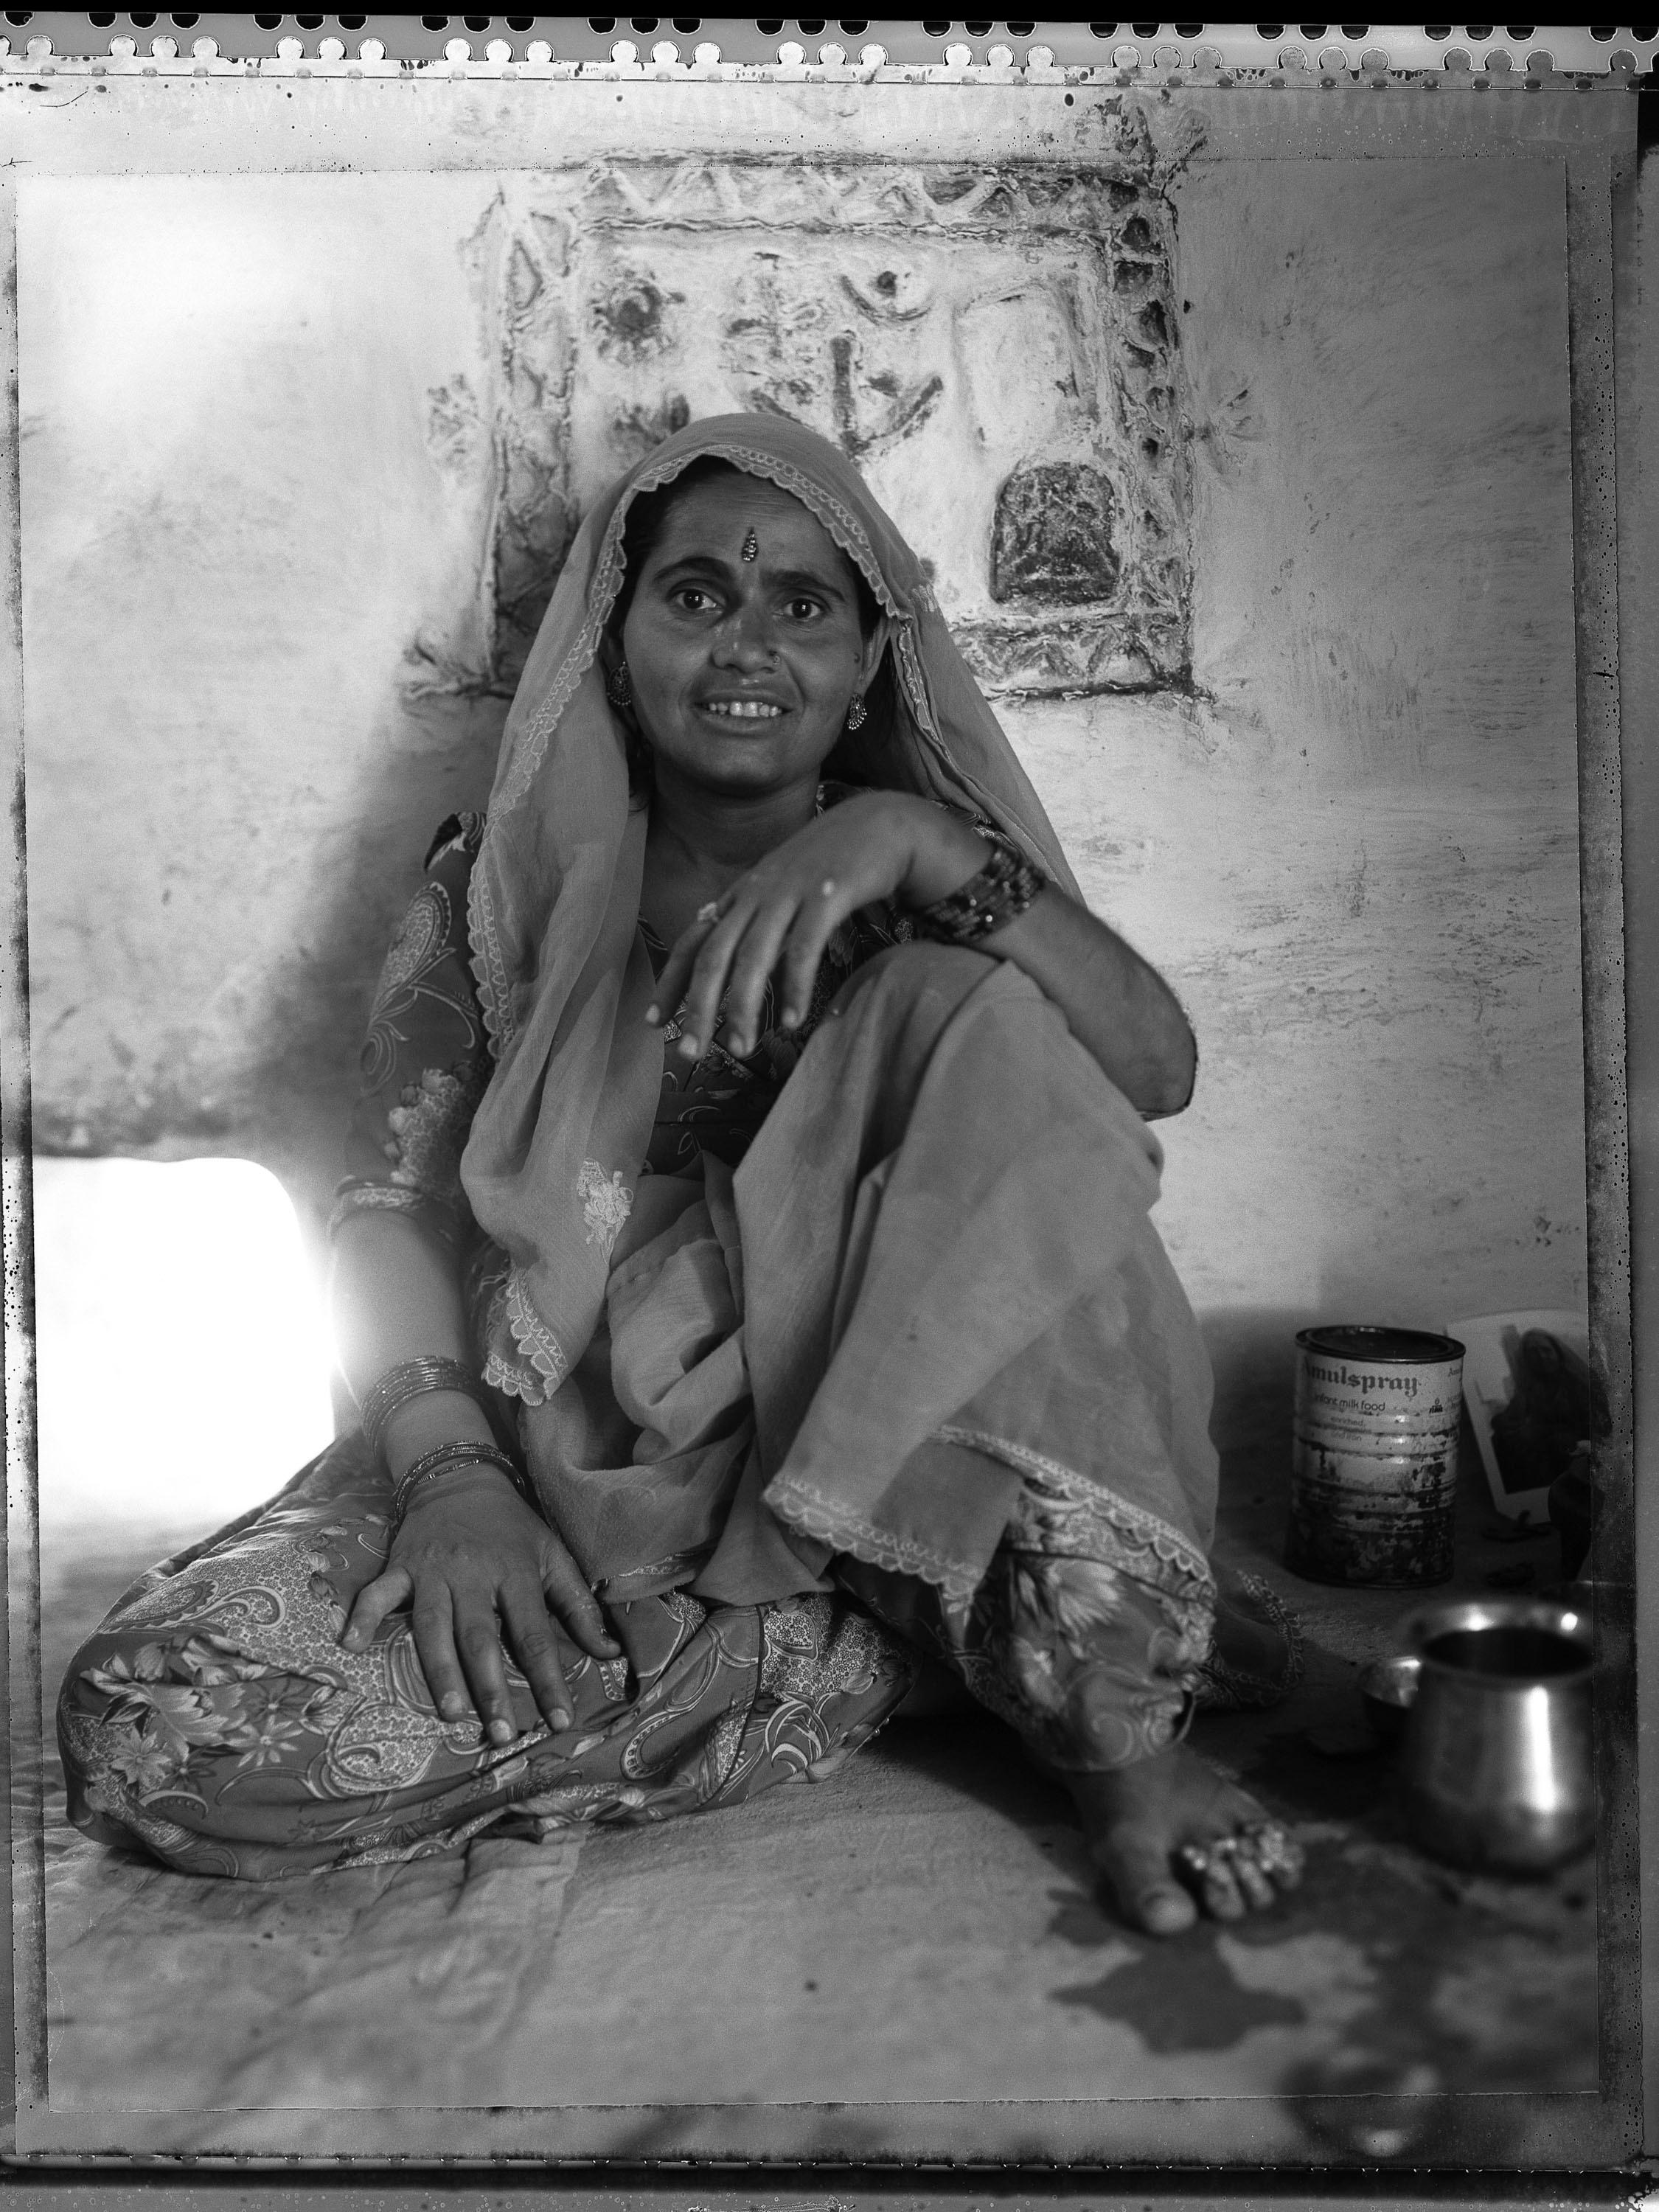 Carlo Bevilacqua Portrait Photograph - Woman in her haveli -Jaisalmer- Rajastan - India -( from  Indian Stills series )